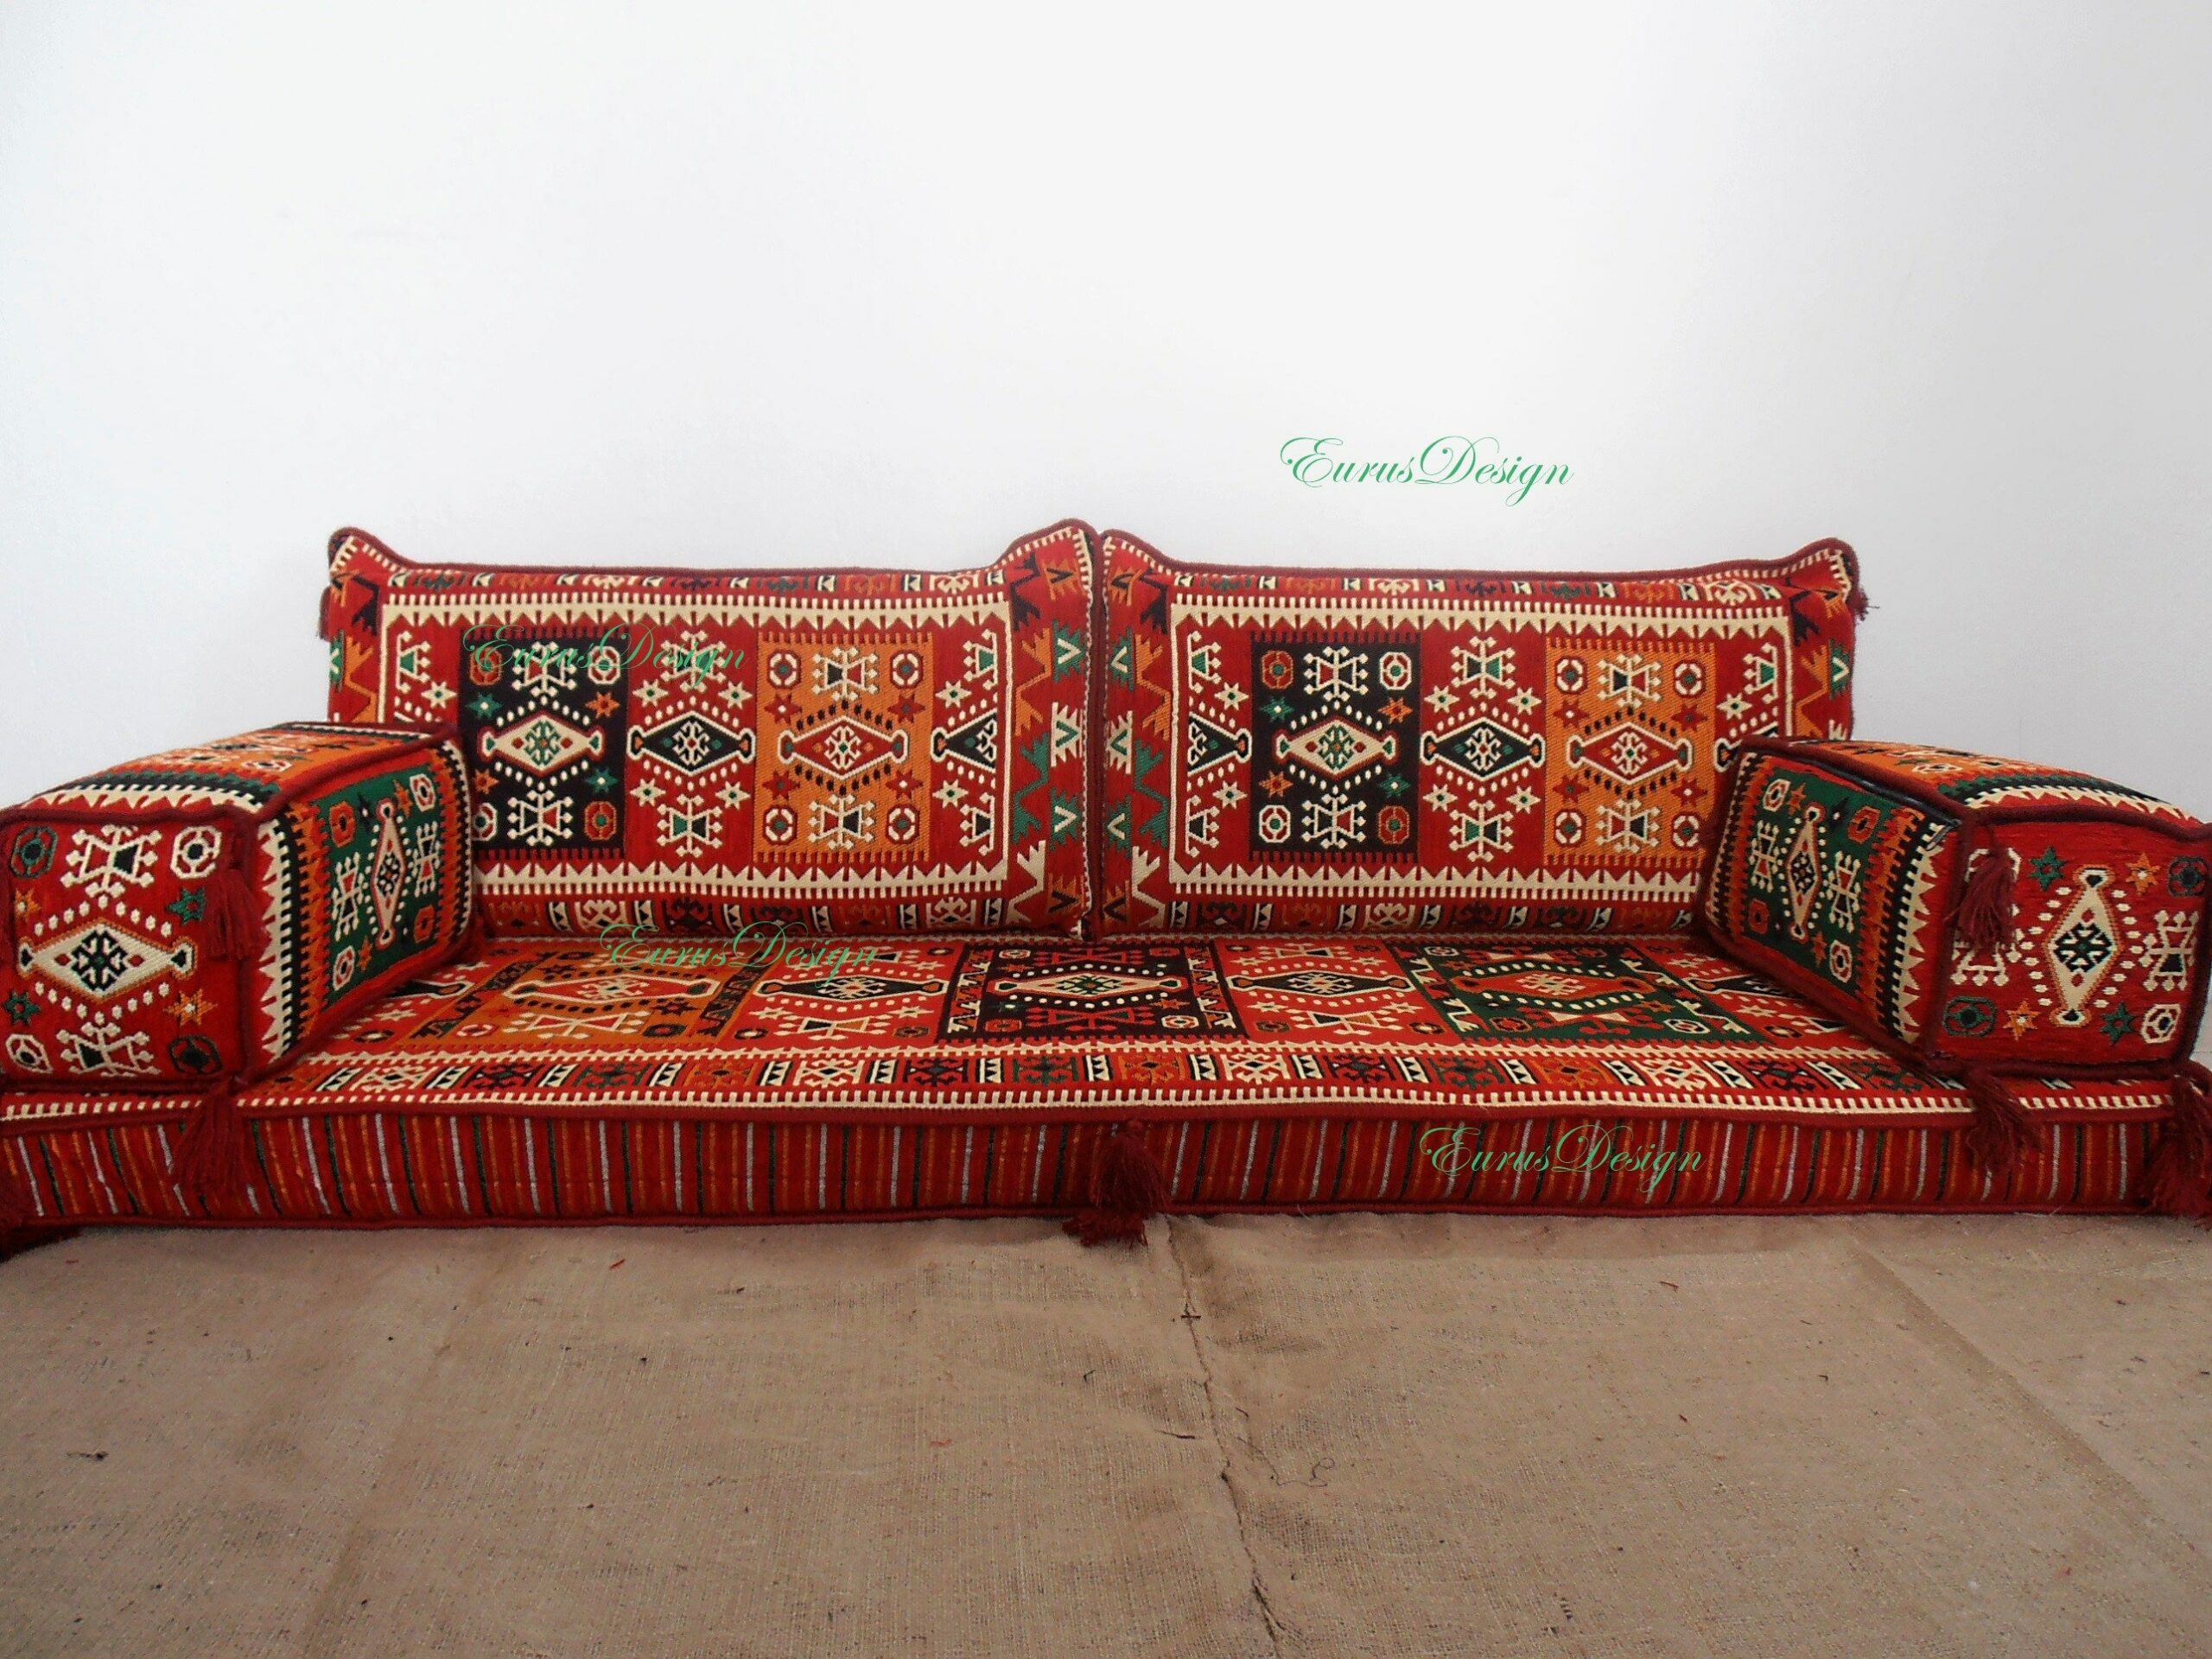 arabian living room furniture